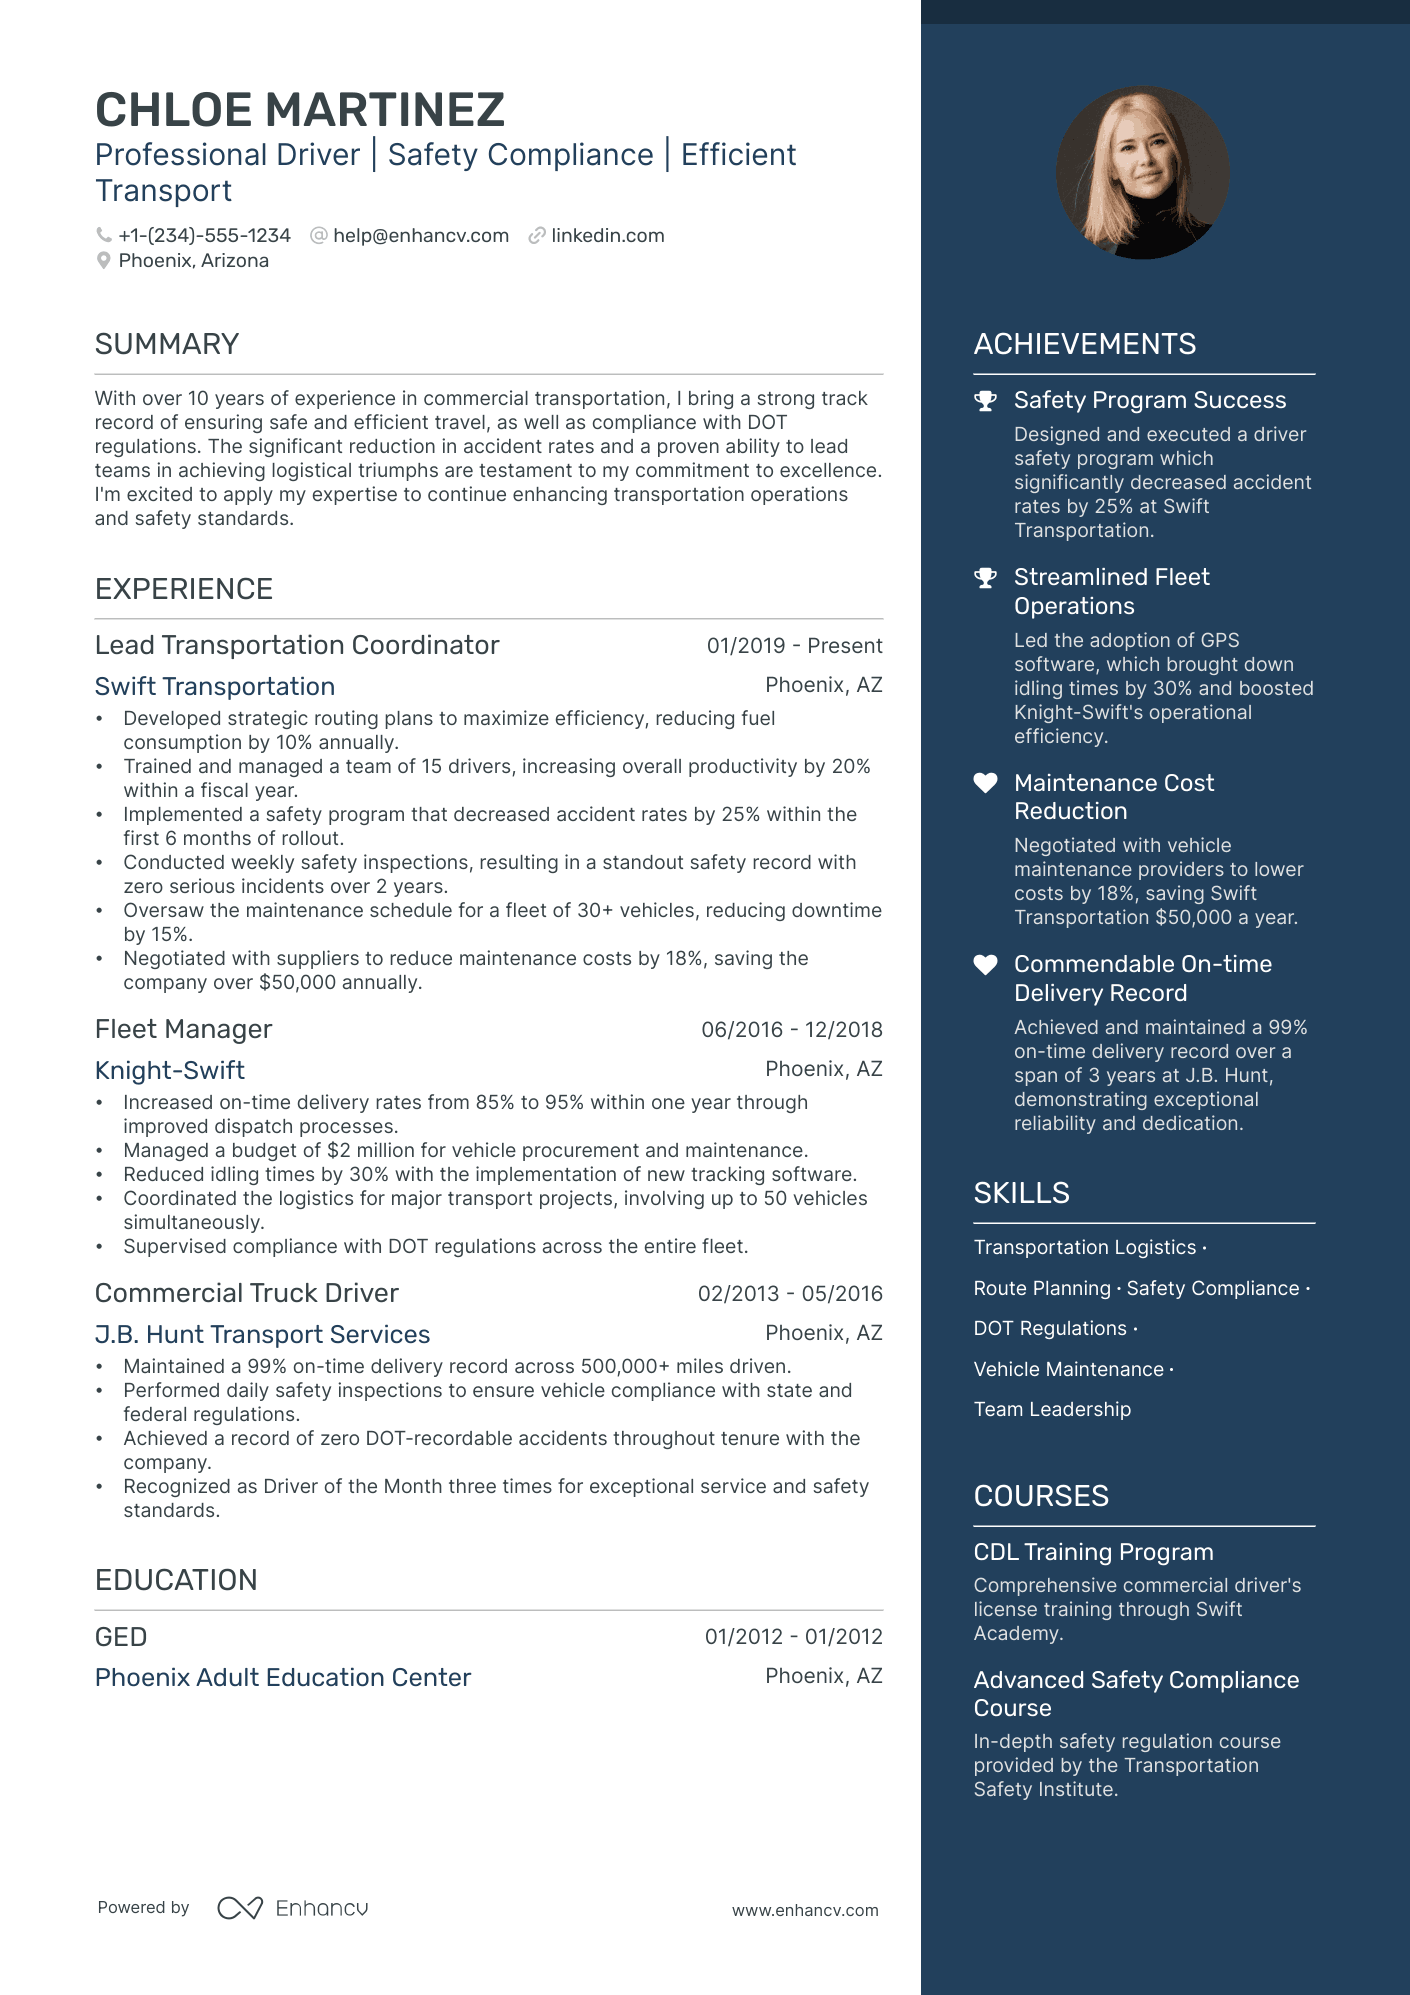 sample resume for school bus driver